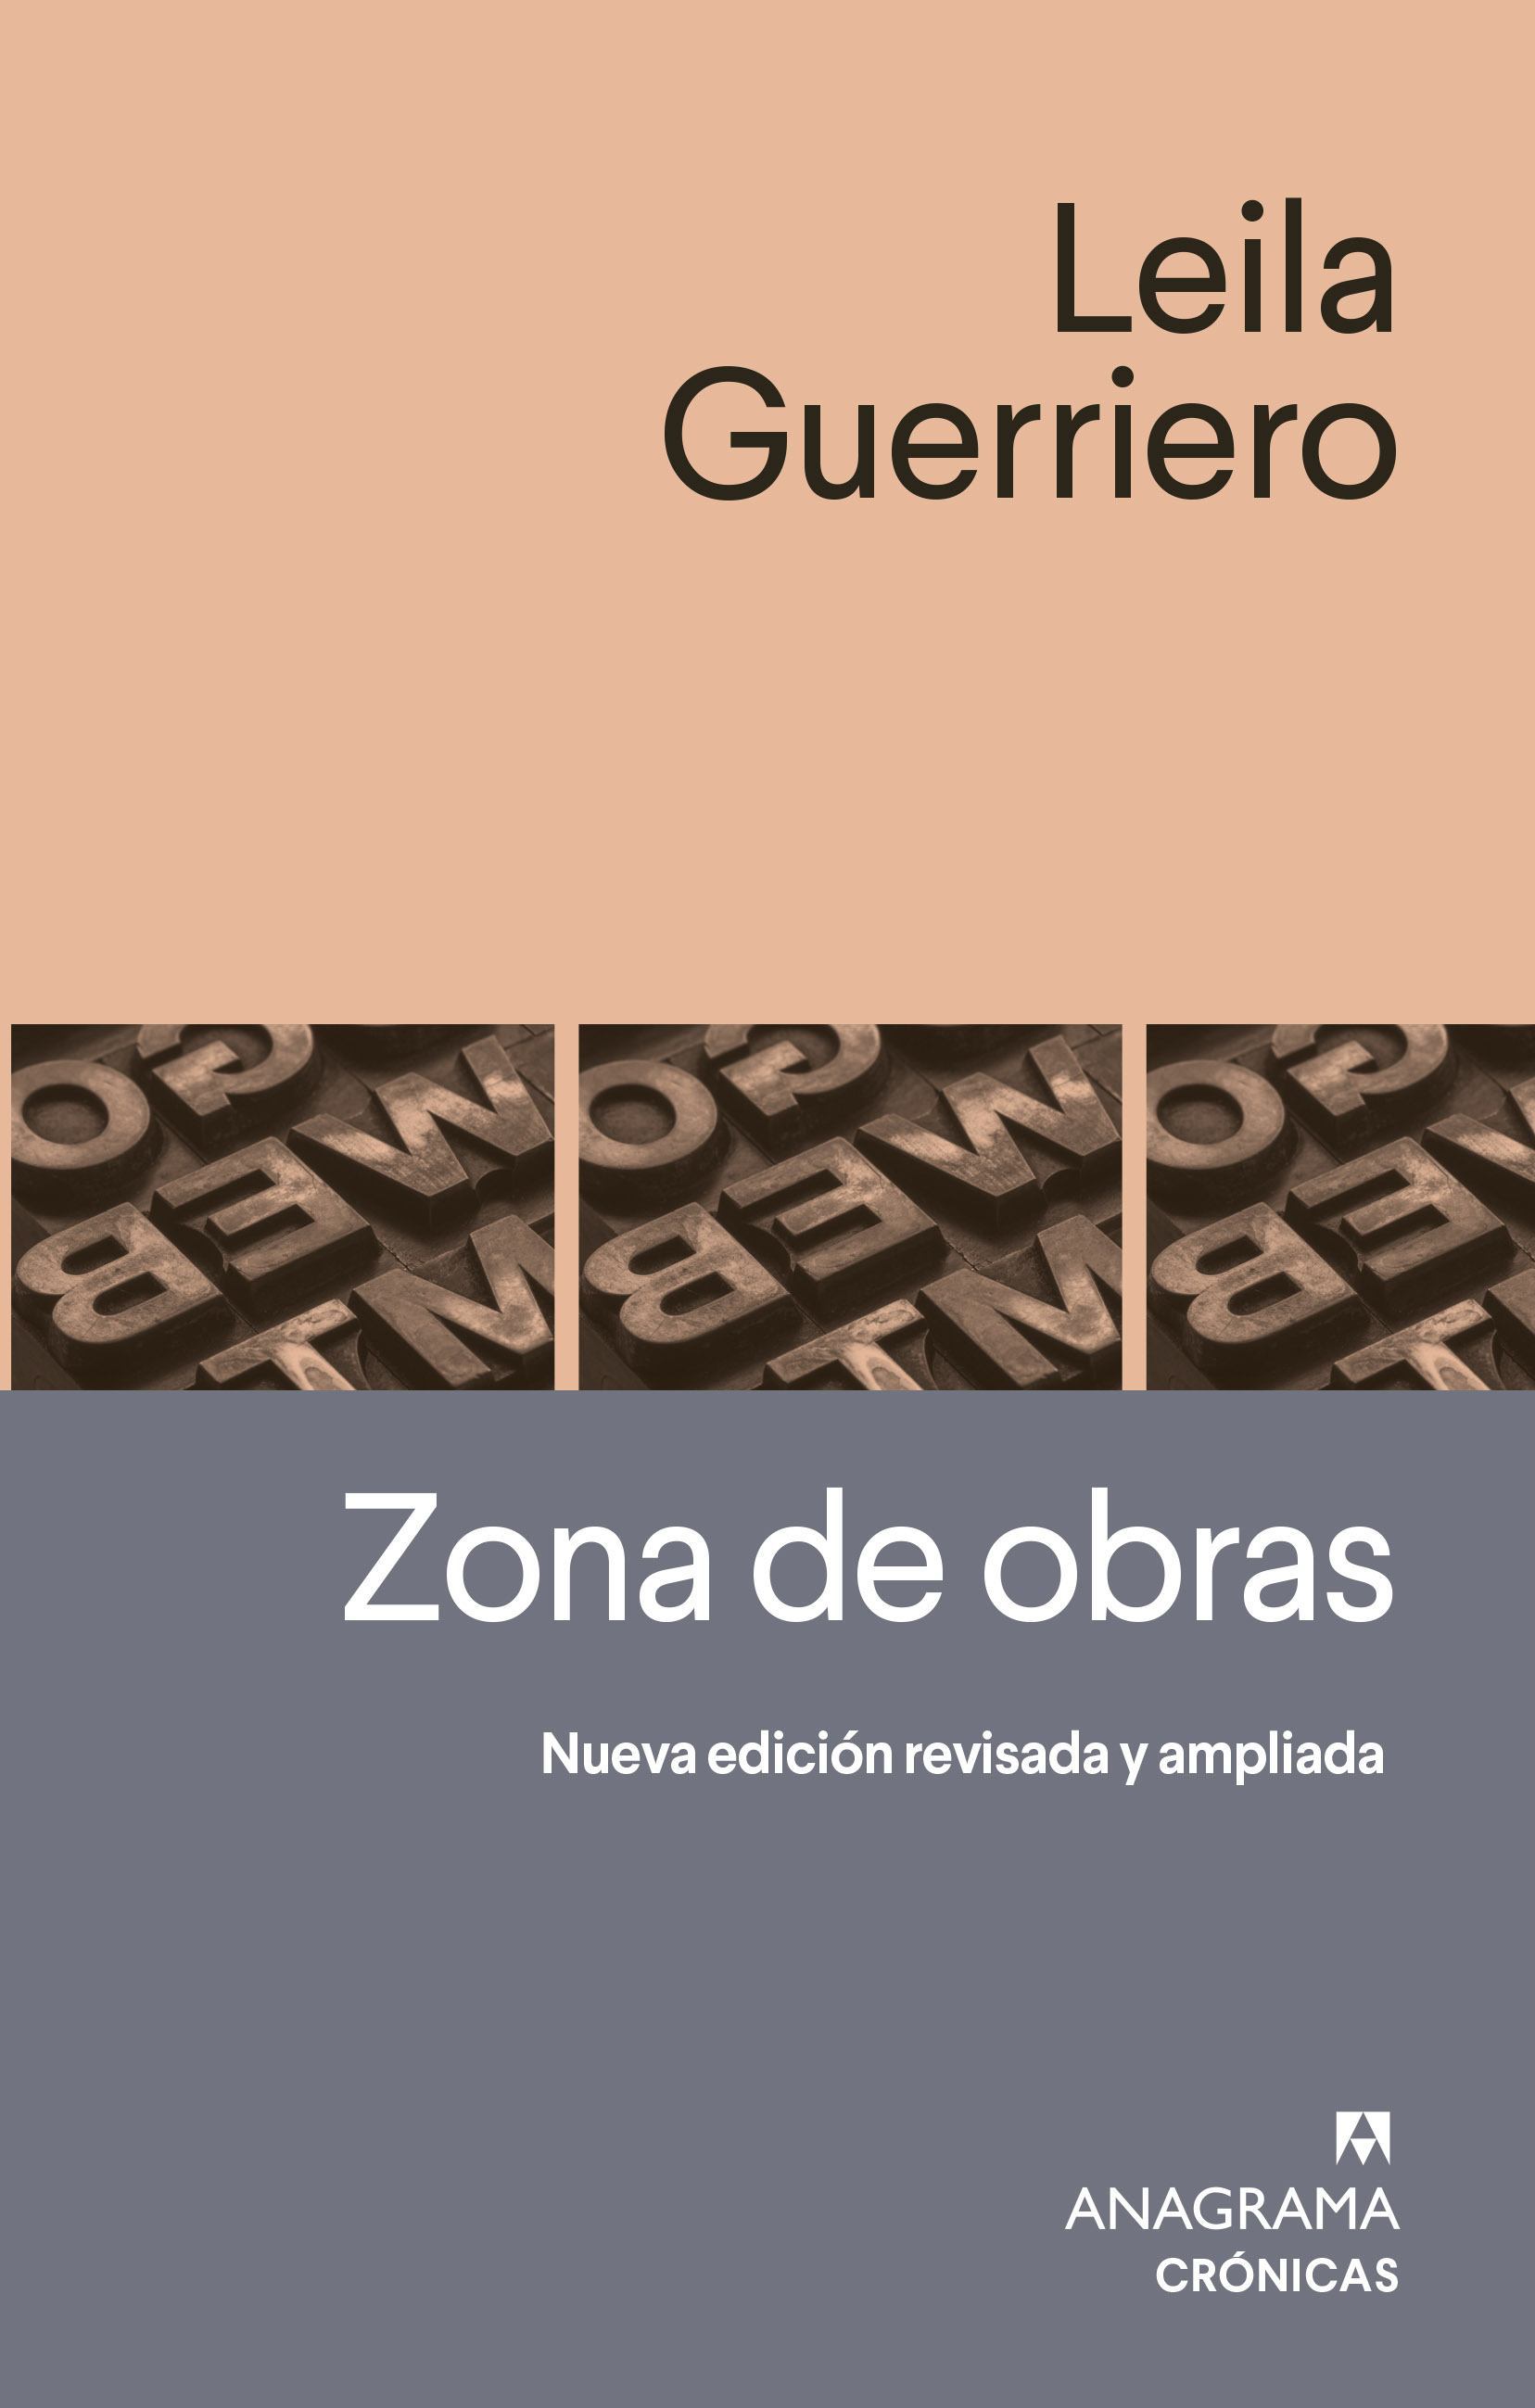 Zona de obras - Guerriero, Leila - 978-84-339-2627-2 - Editorial Anagrama